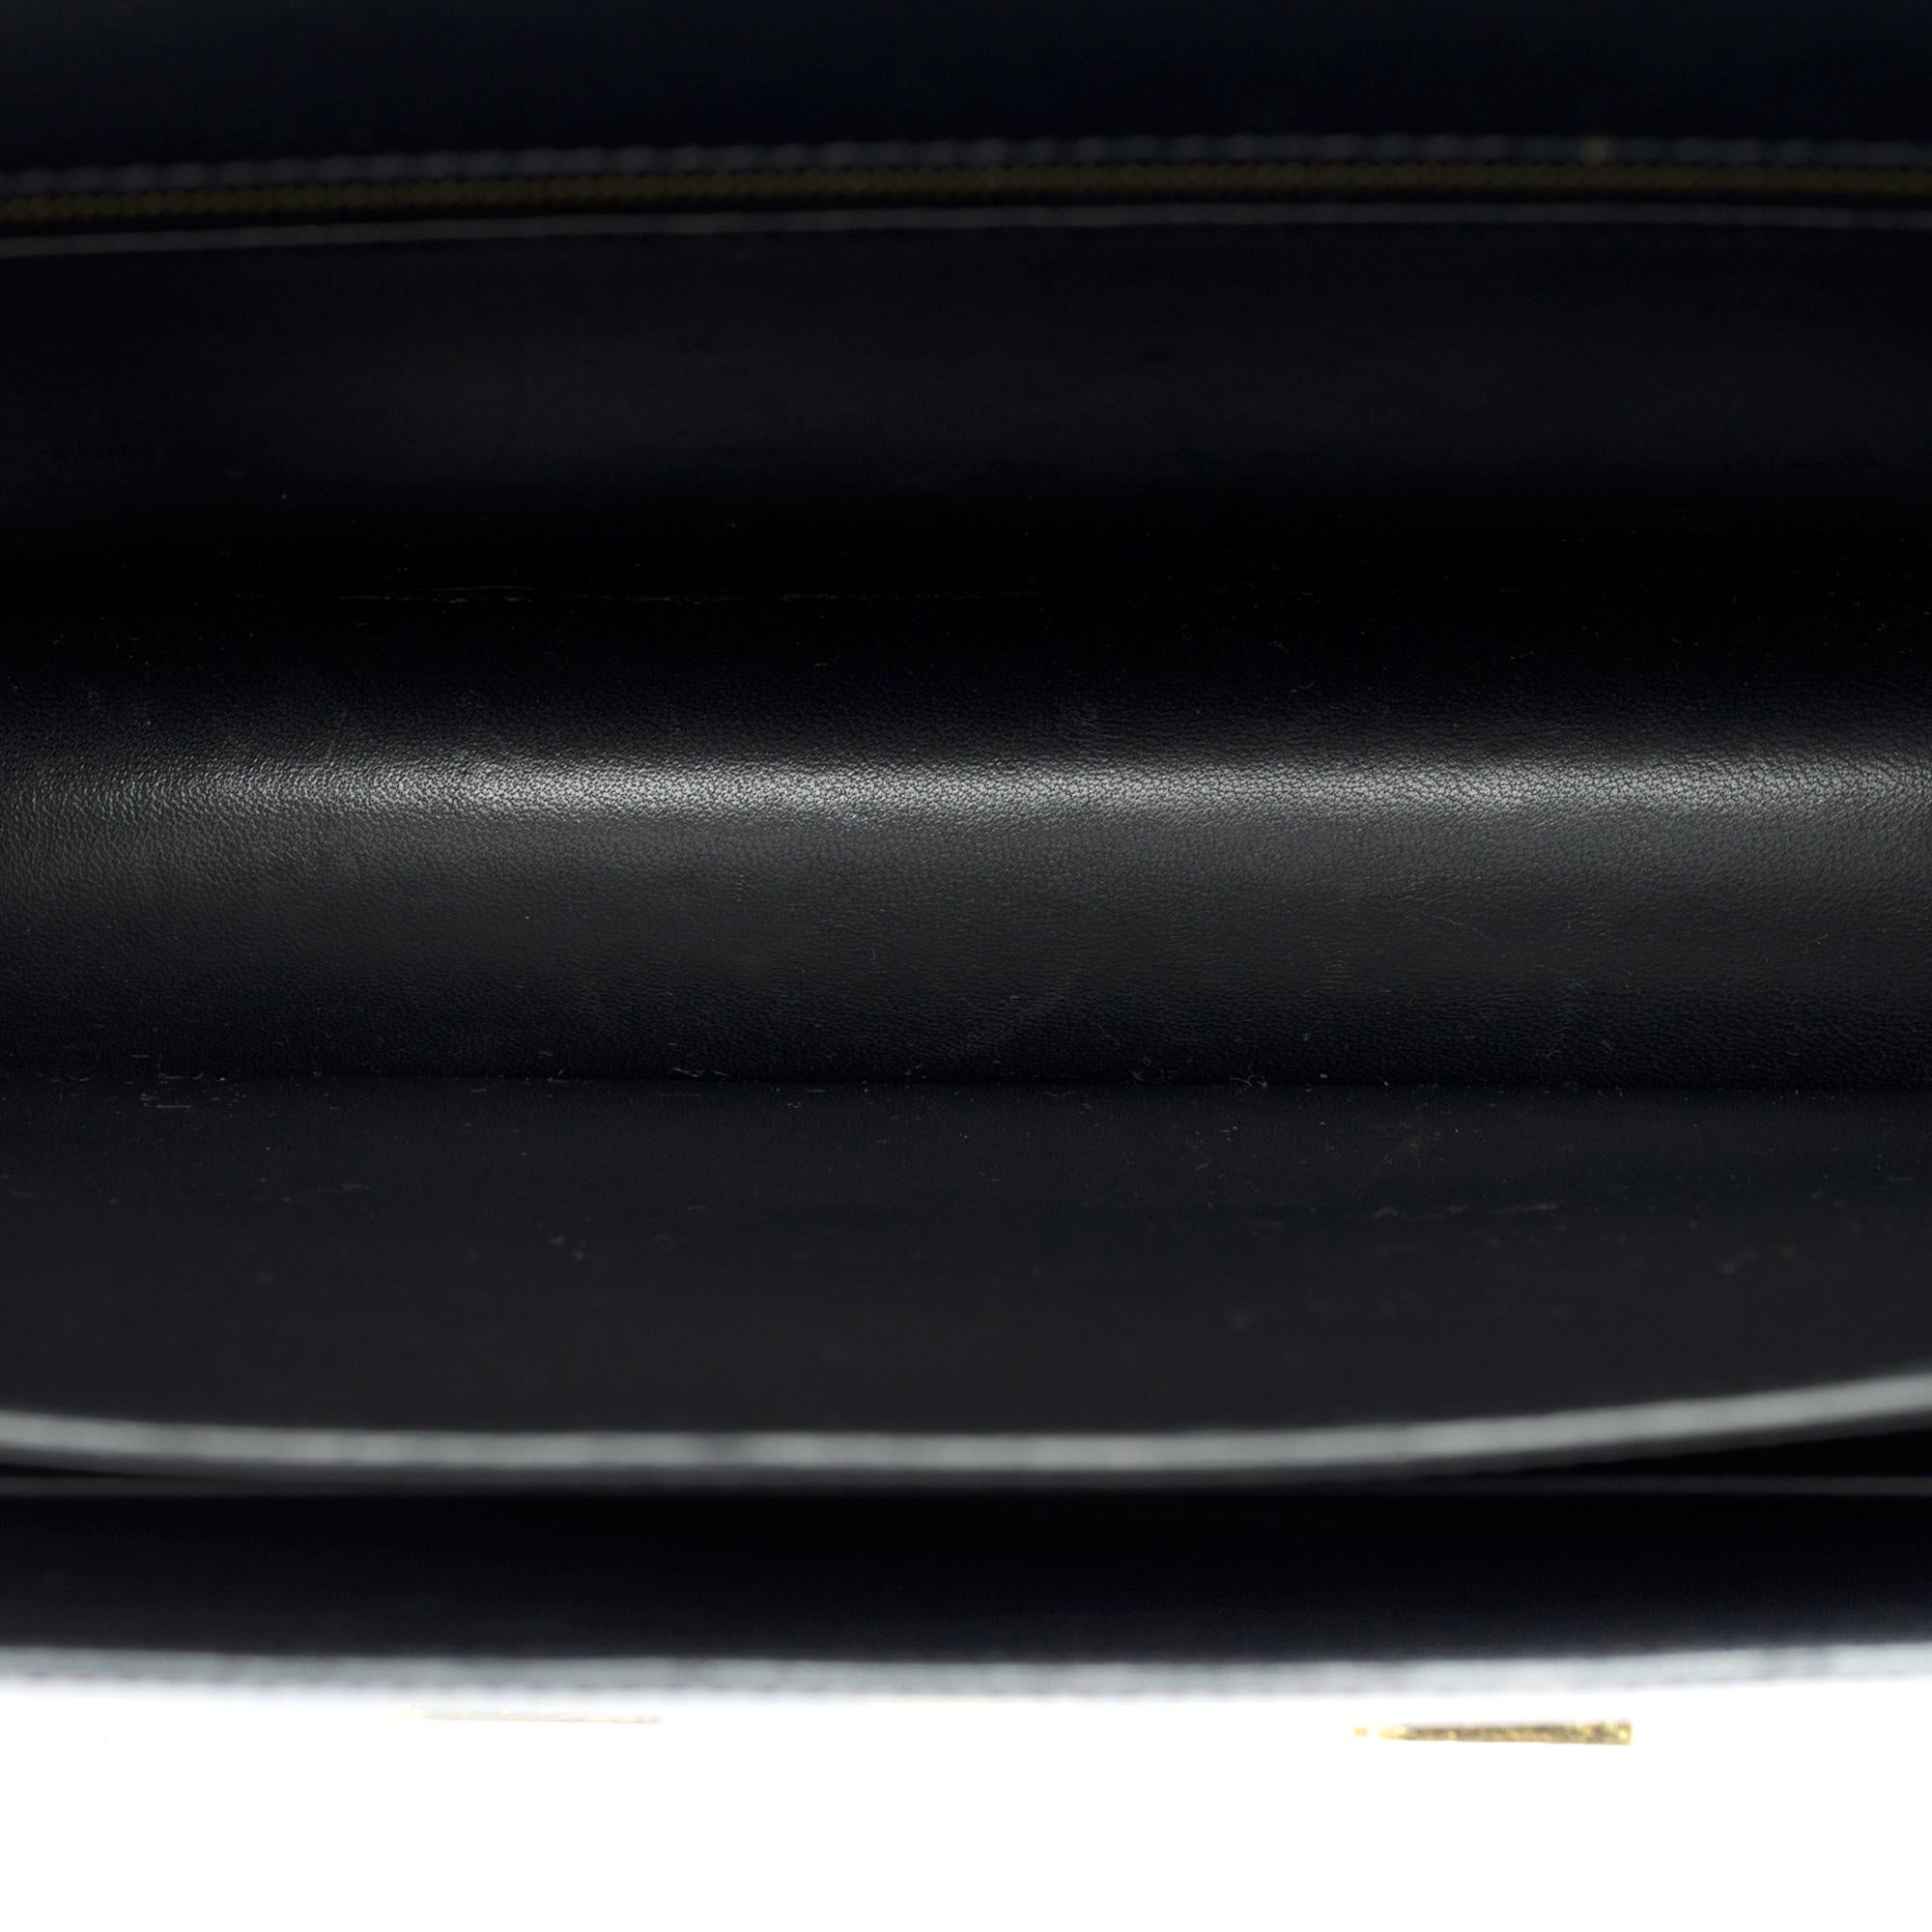  Rare Hermès Constance Cartable shoulder bag in Black Box Calf leather , GHW For Sale 5